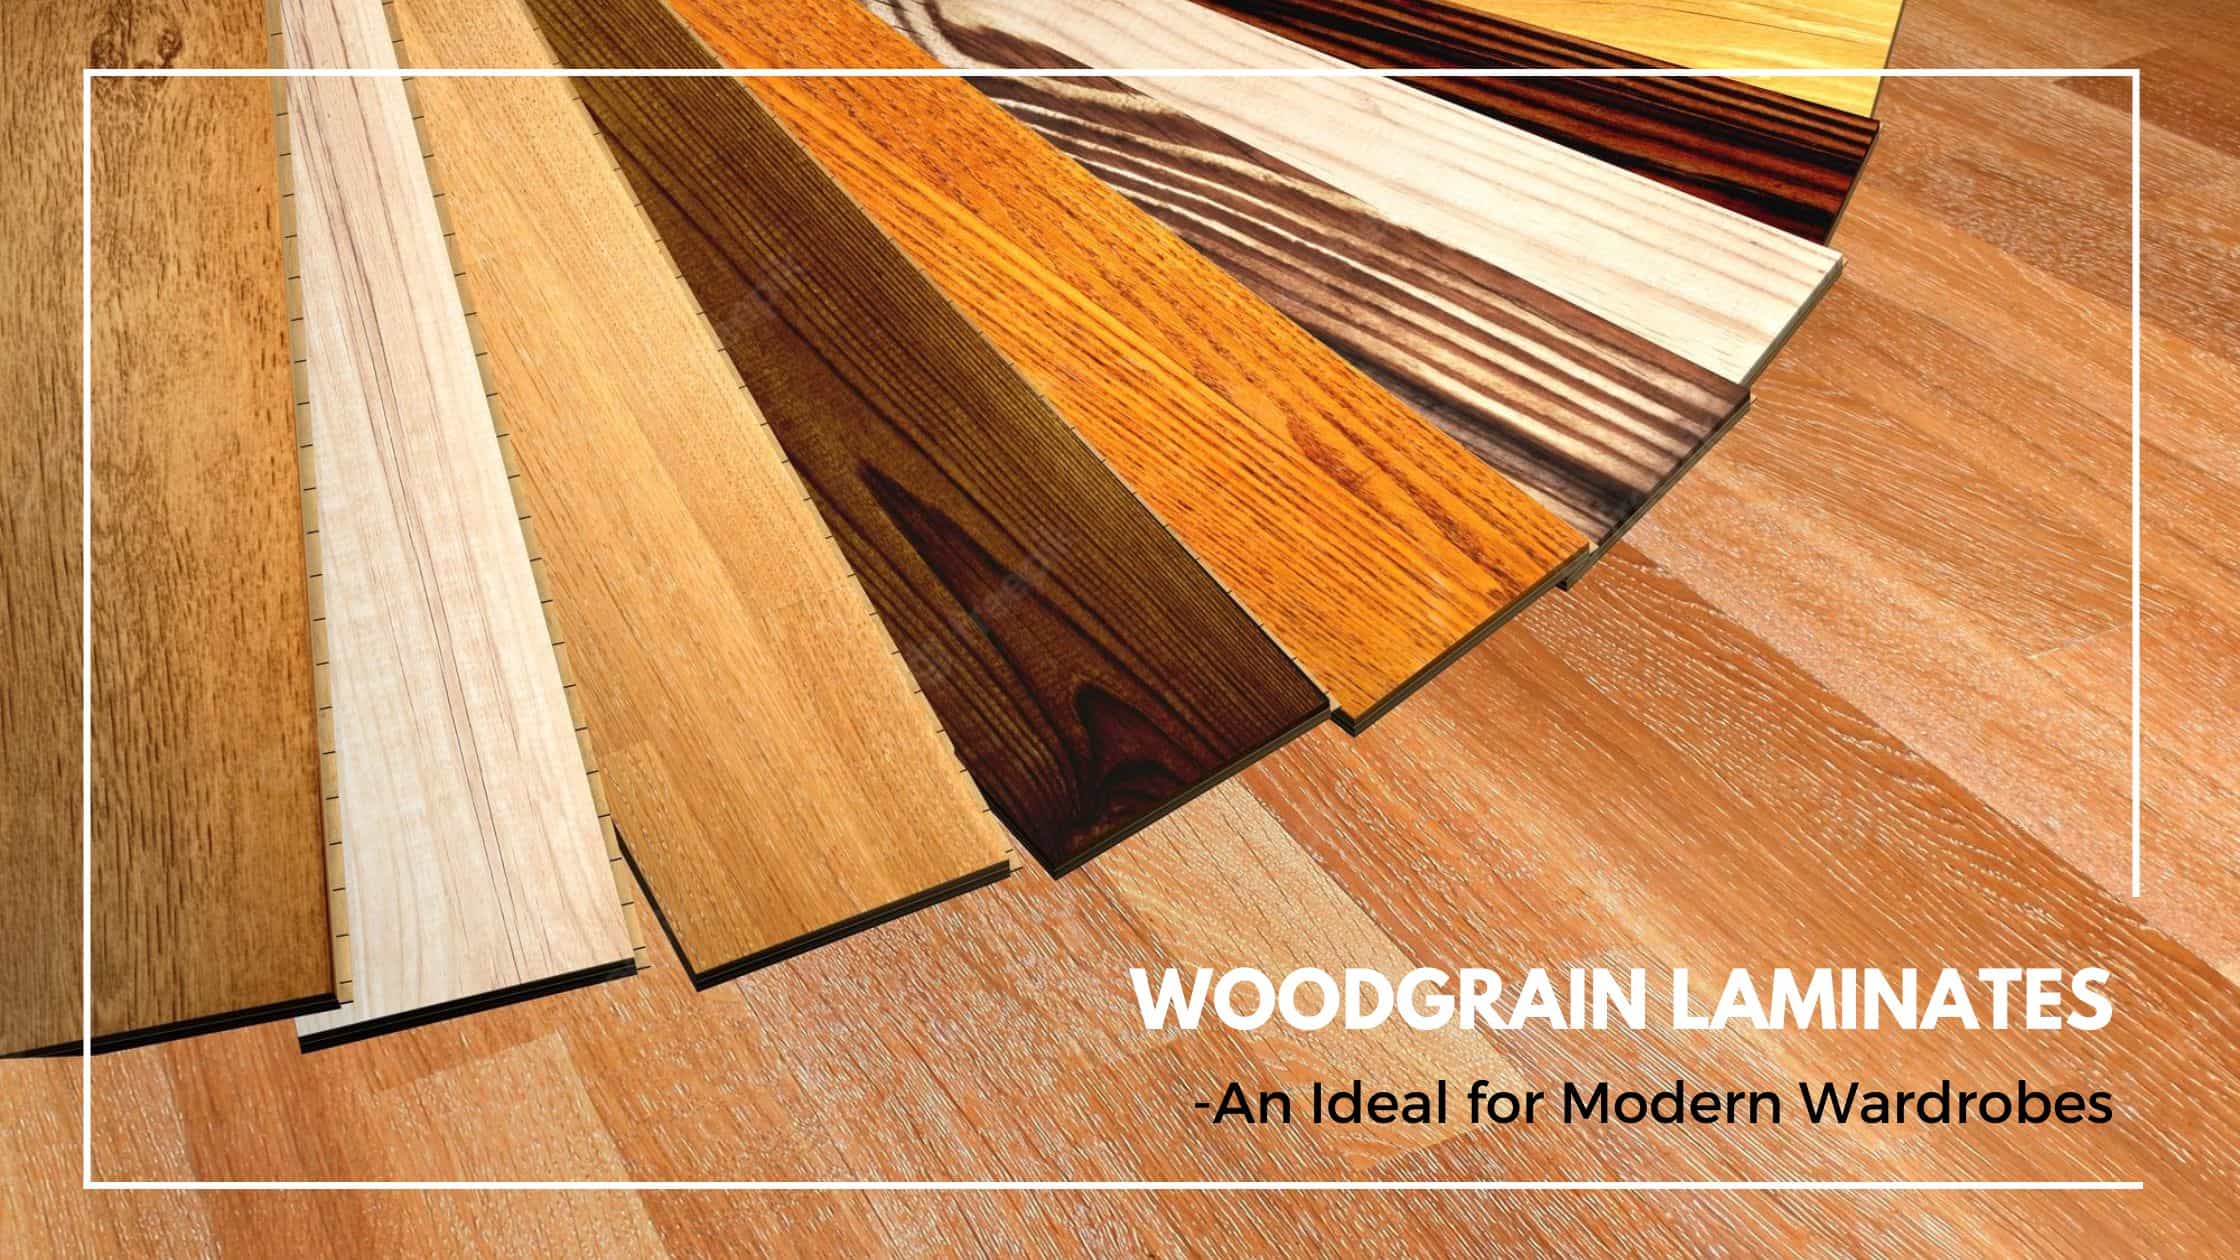 Woodgrain Laminates - An Ideal for Modern Wardrobes